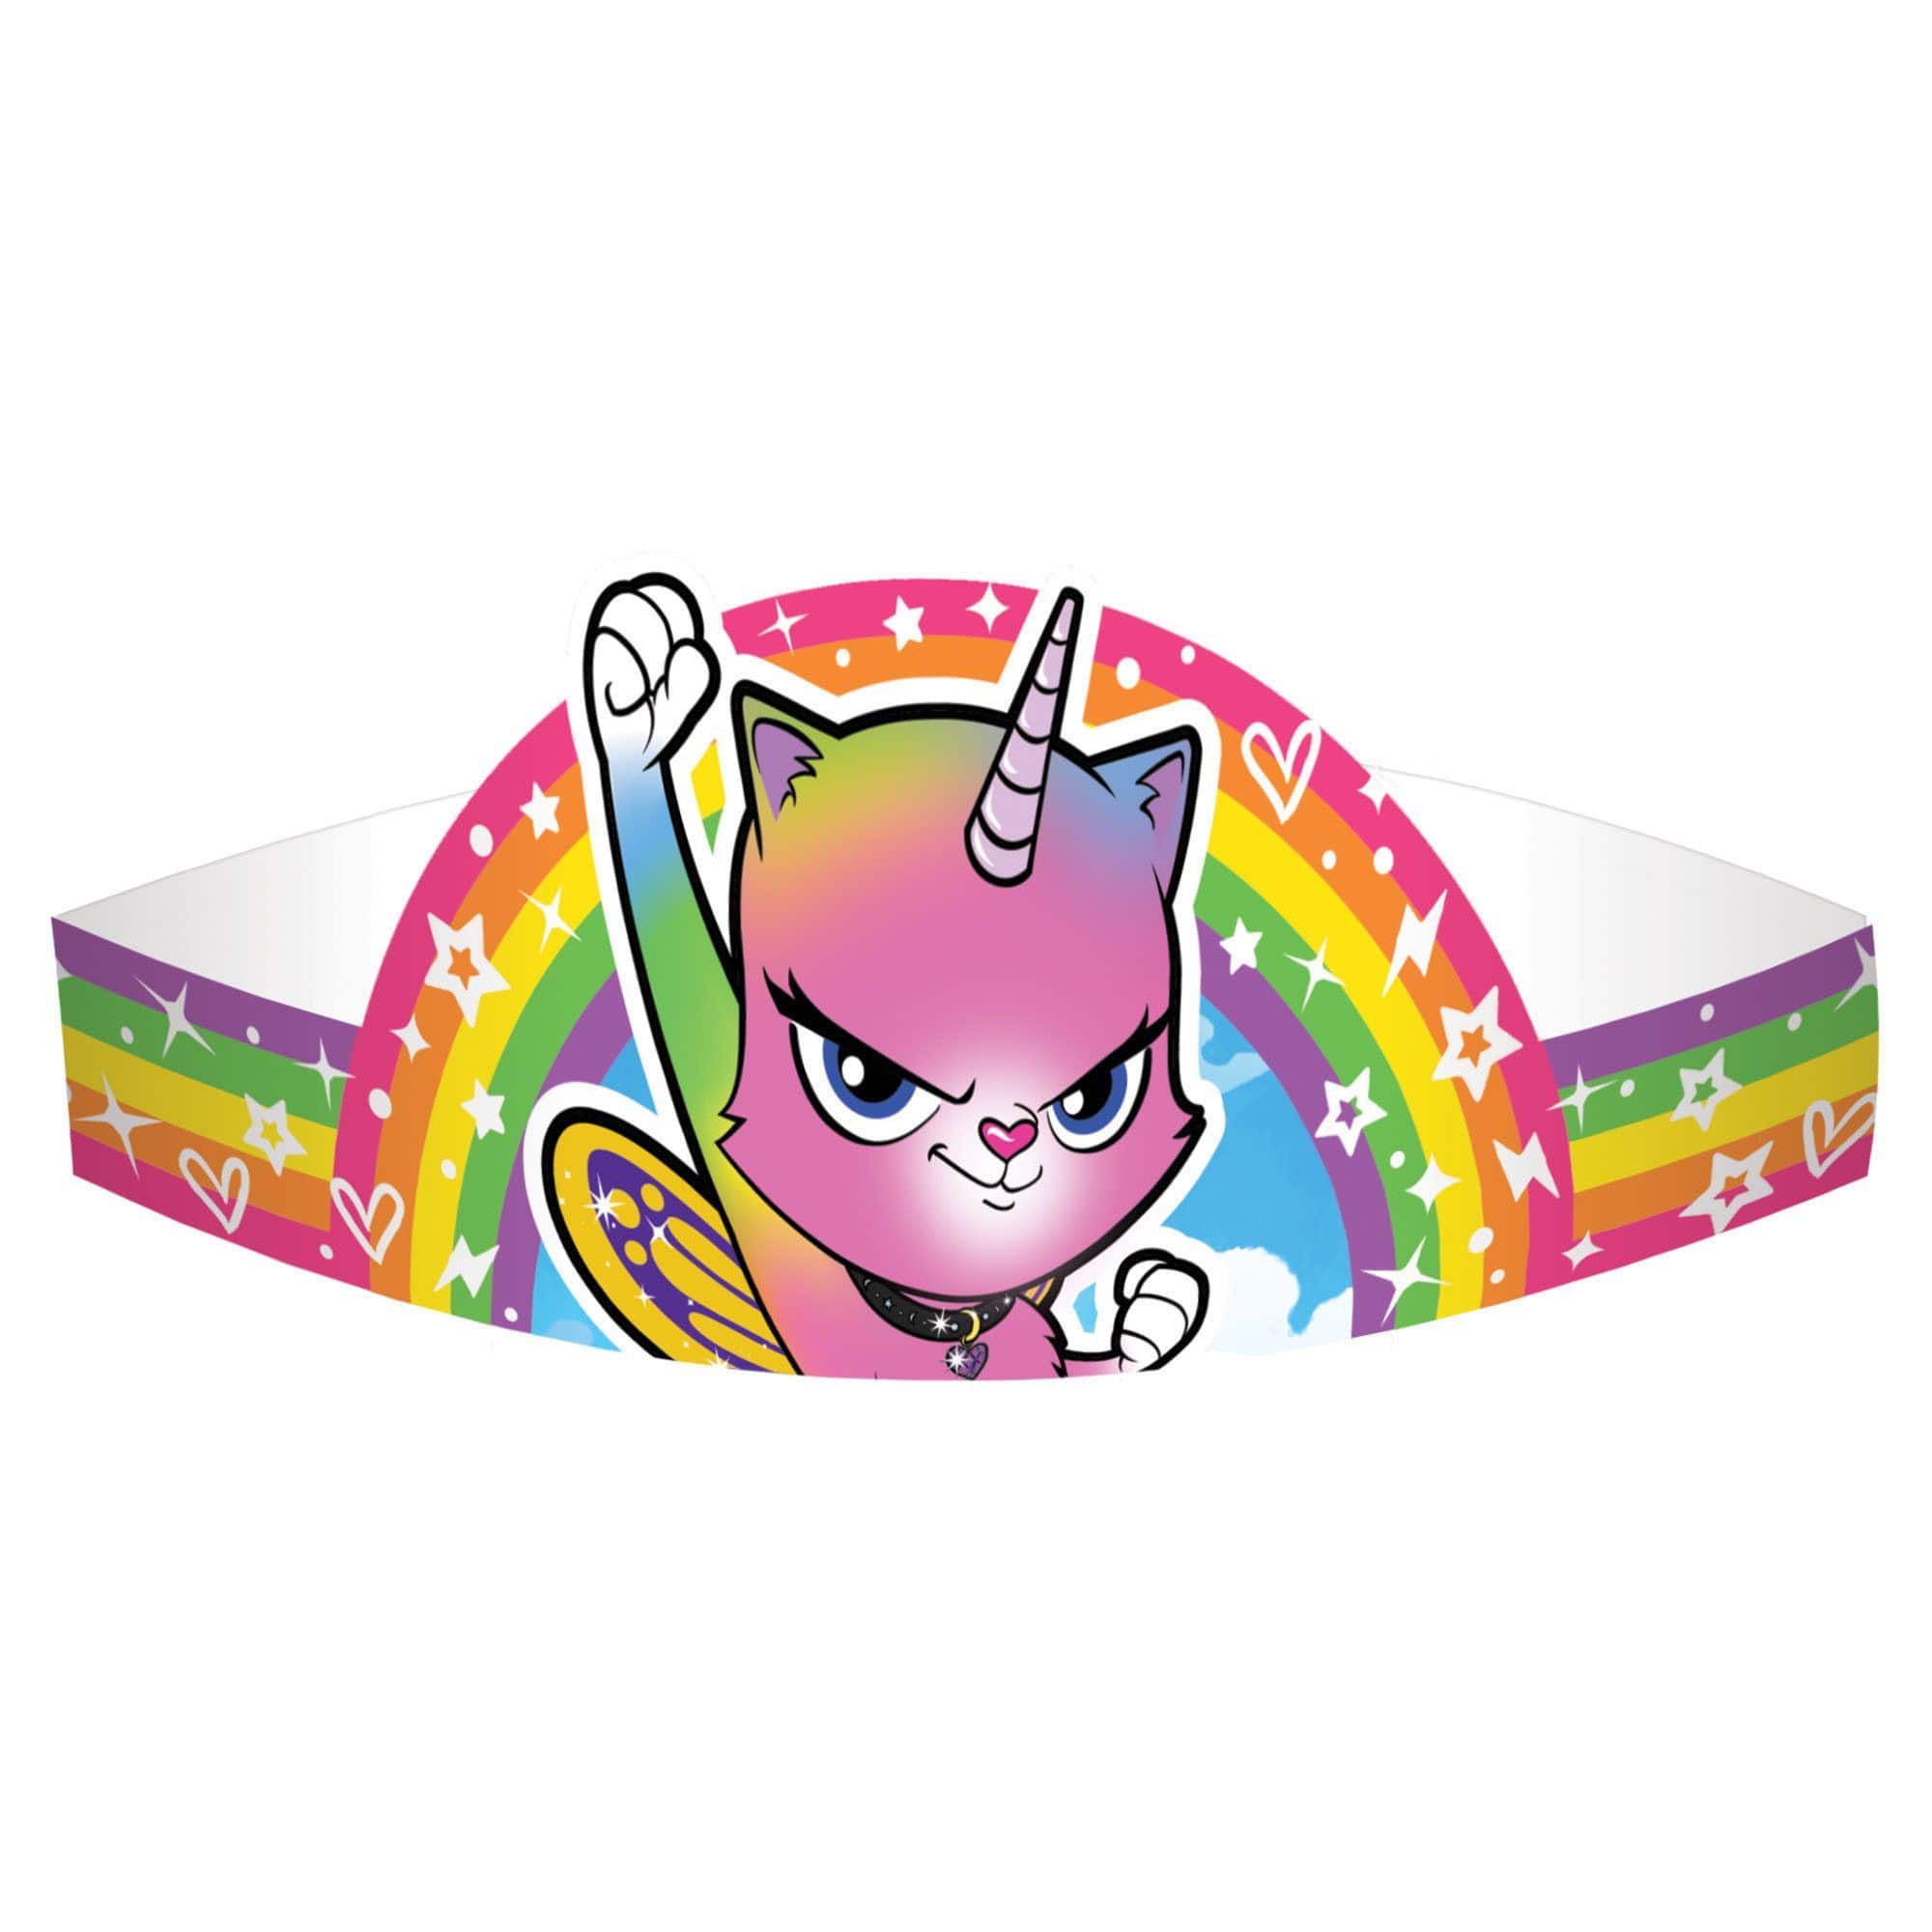 Unicorn Rainbow Party Decor Kit – Kudzu Monster